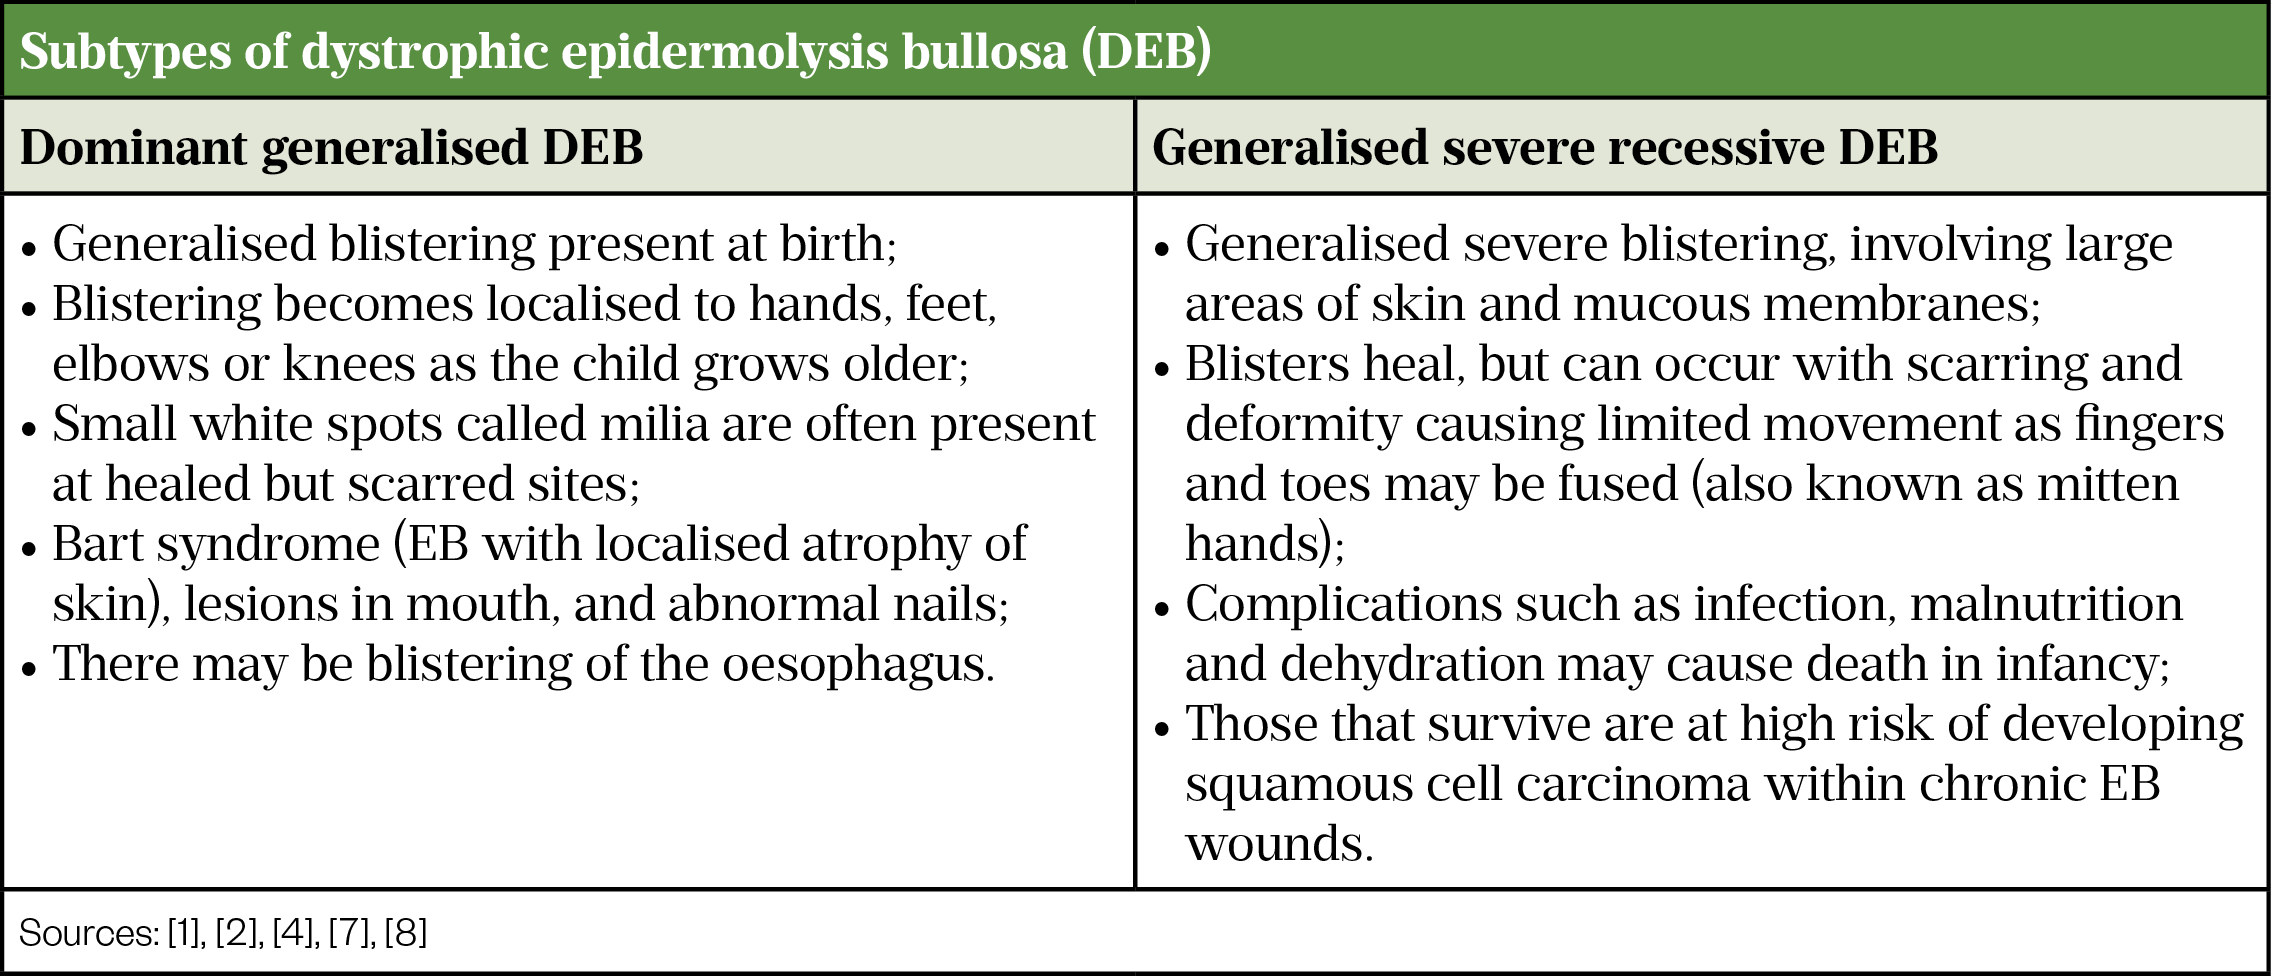 Table 2. Subtypes of dystrophic epidermolysis bullosa (DEB)